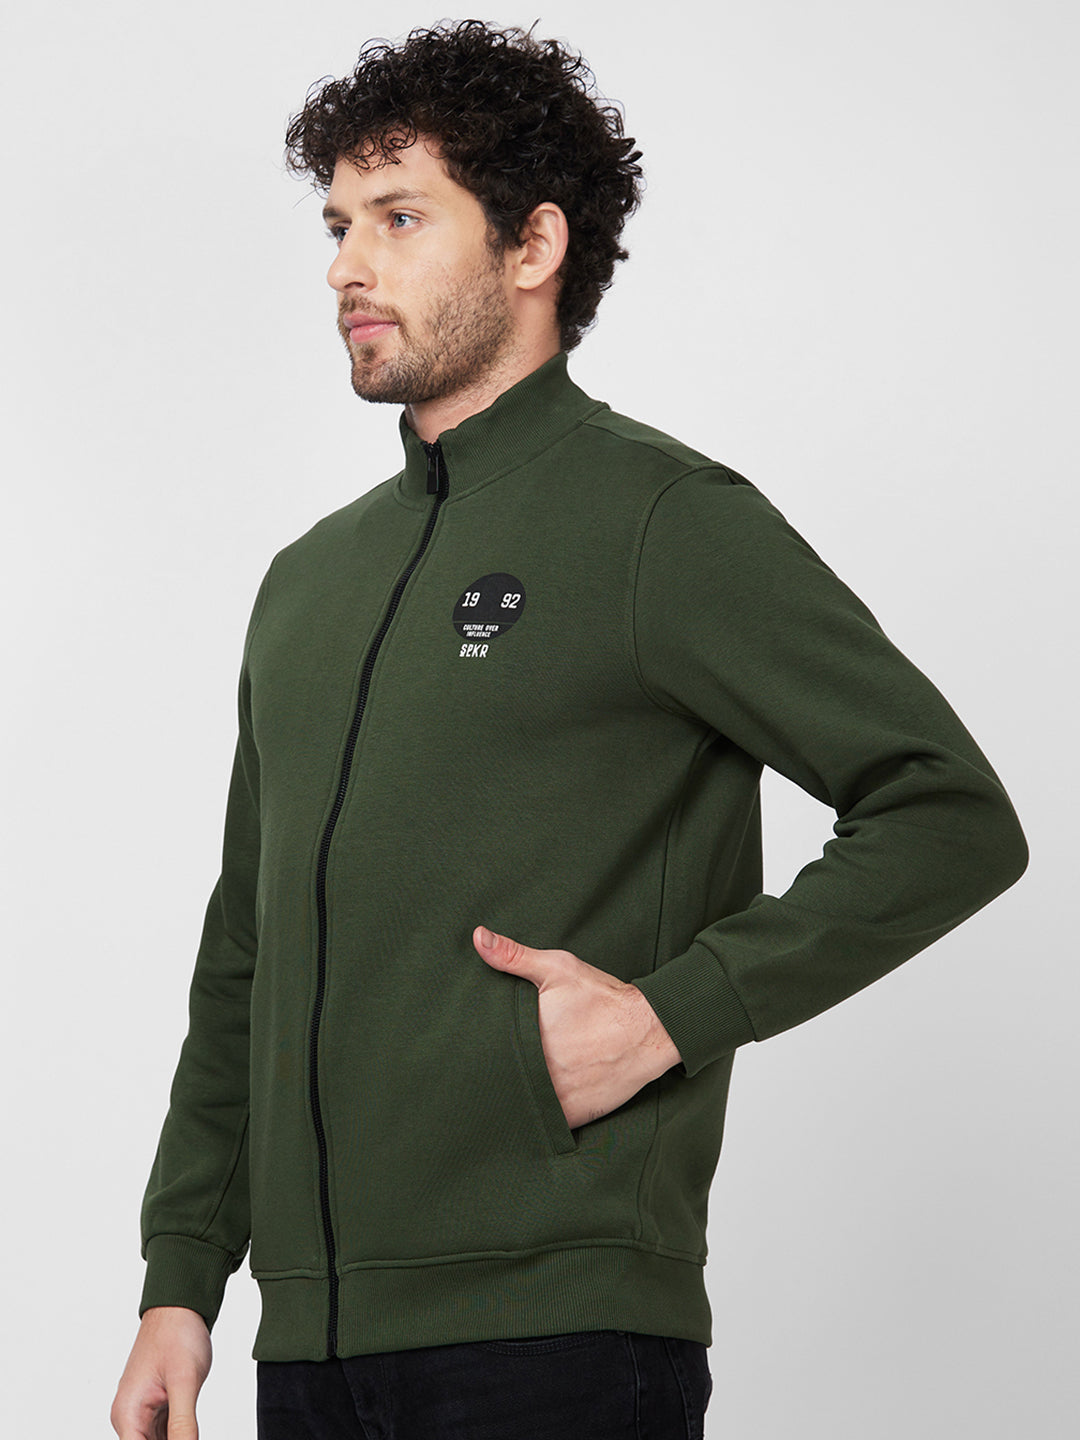 Spykar High Neck Full Sleeve Green Sweatshirt For Men